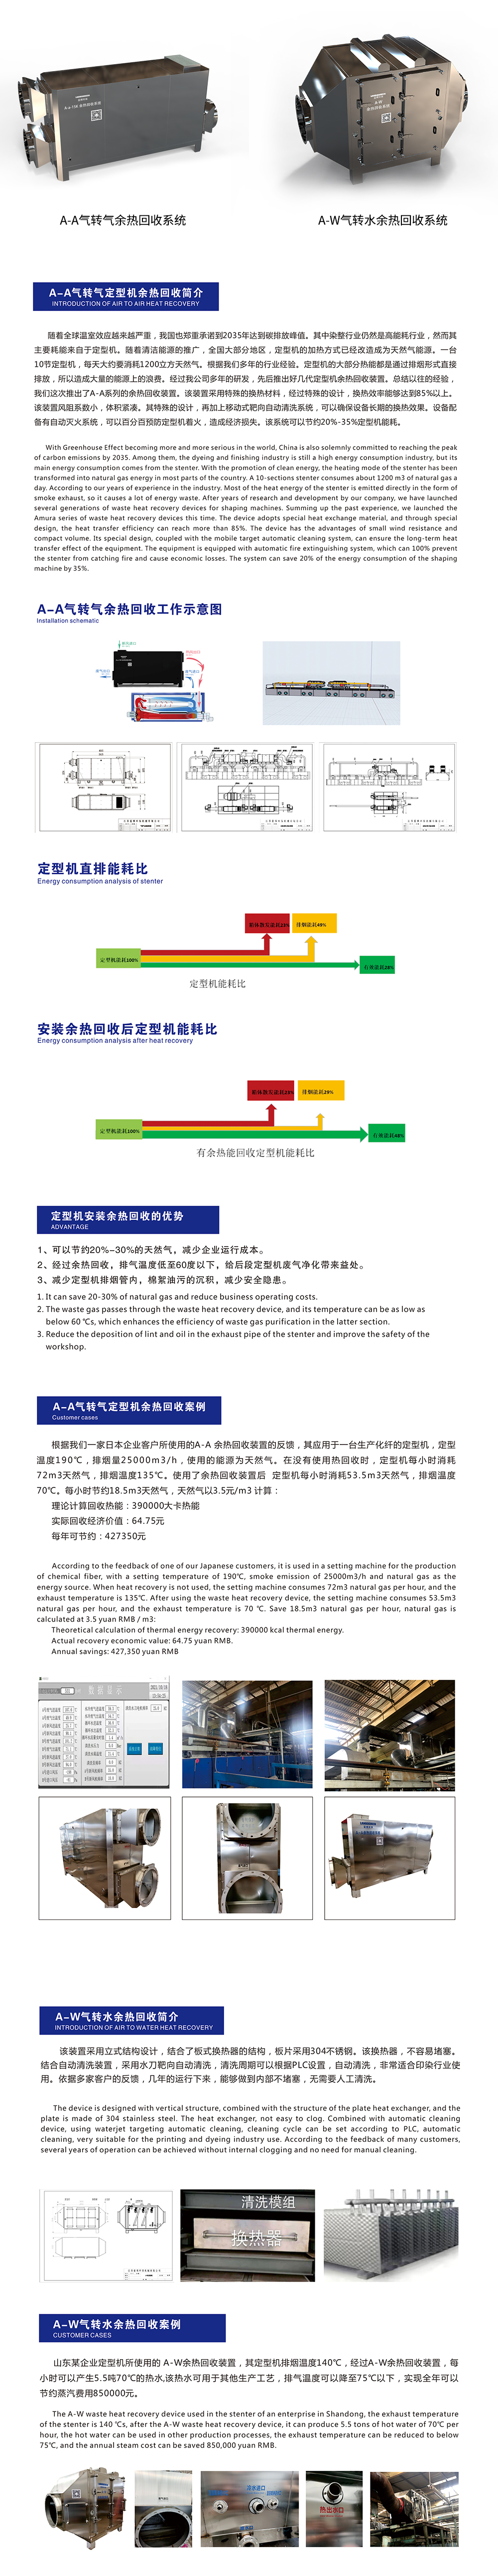 Setting machine energy management system(图1)